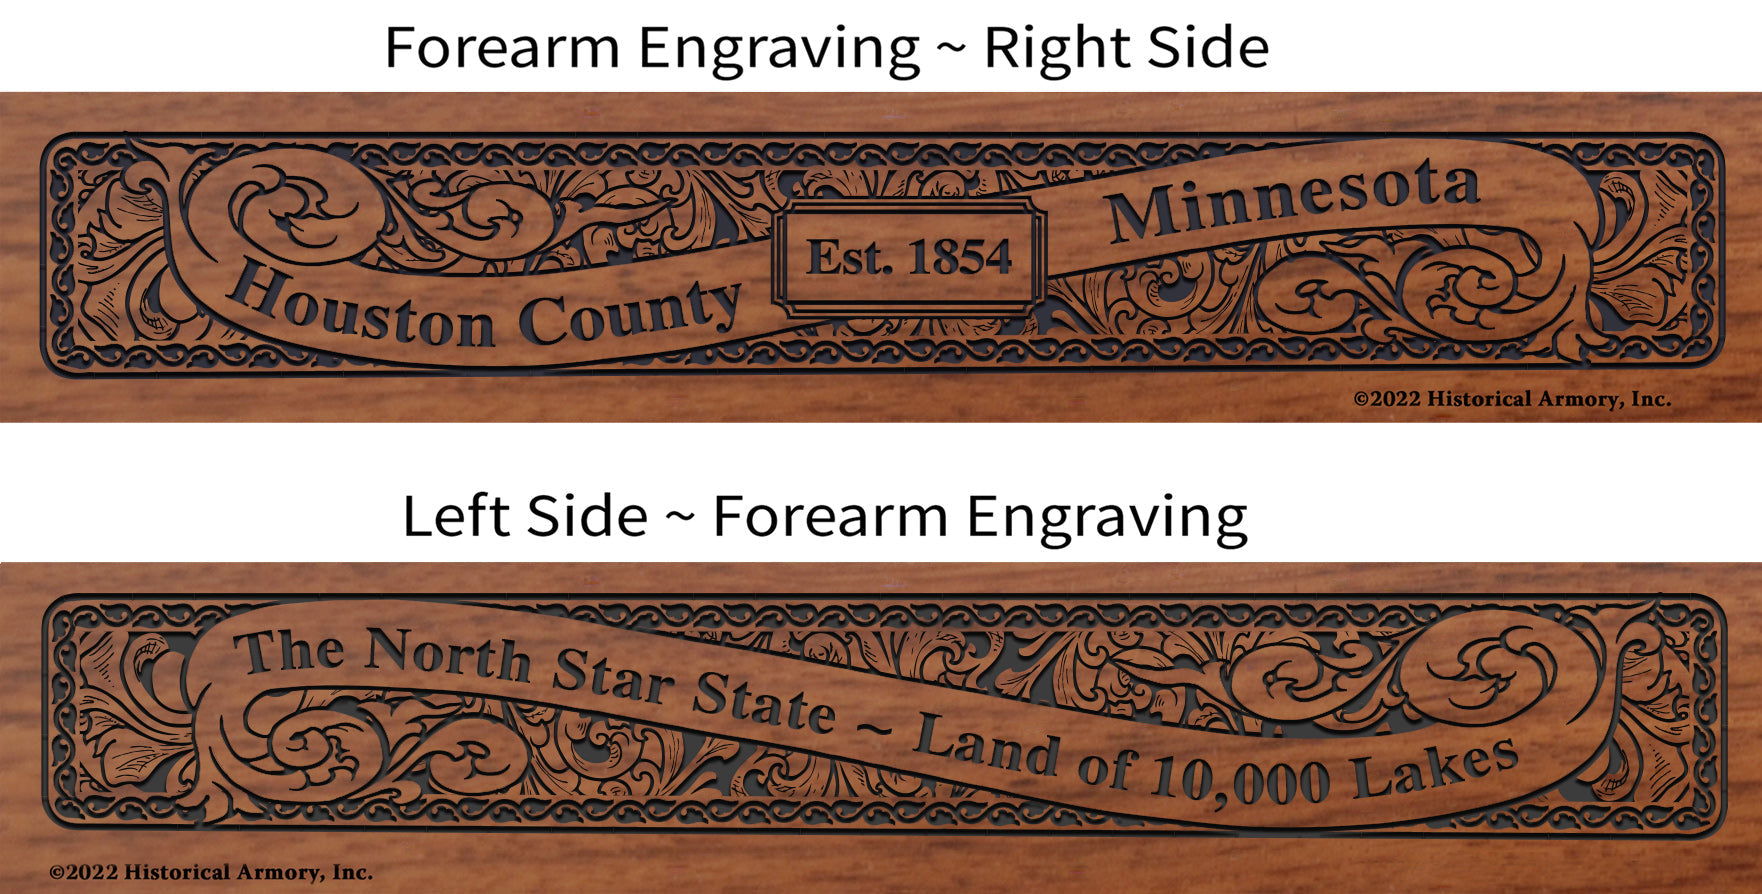 Houston County Minnesota Engraved Rifle Forearm